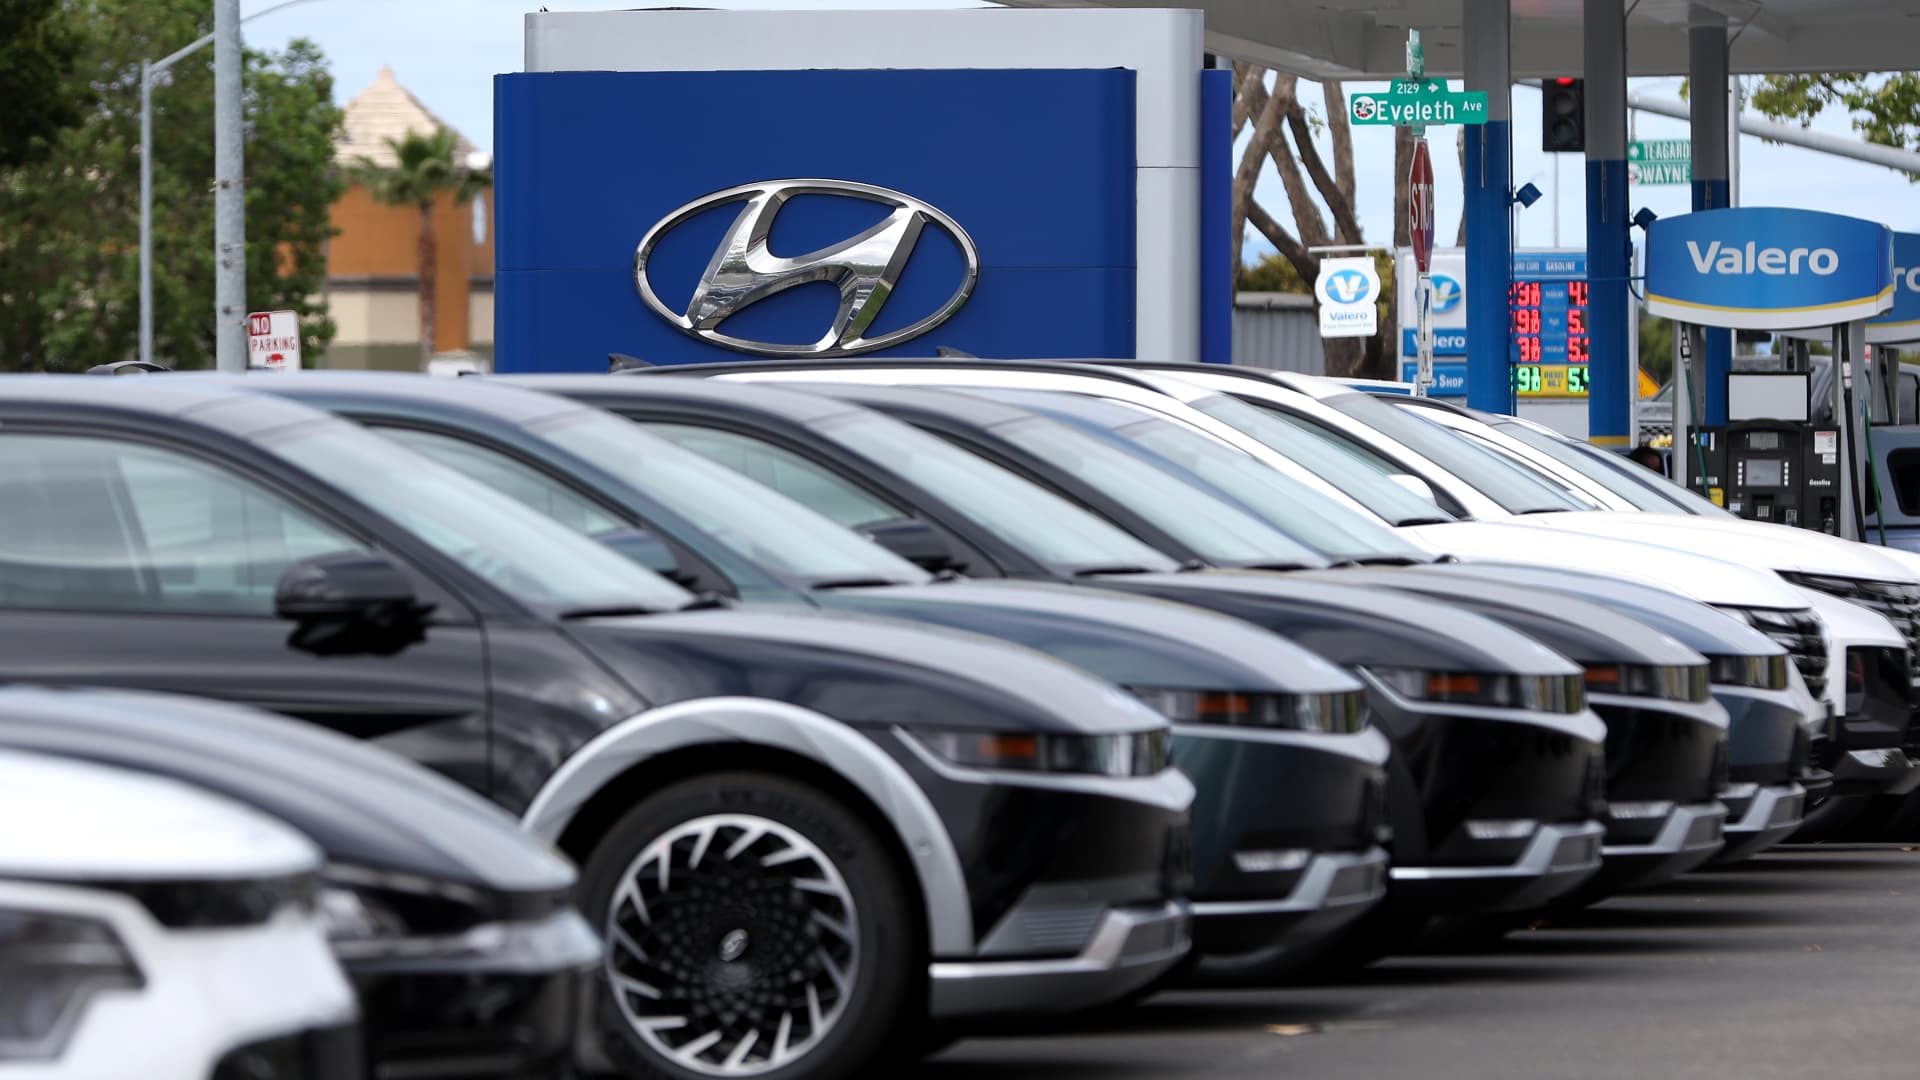 New Hyundai cars are displayed on the sales lot at San Leandro Hyundai on May 30, 2023 in San Leandro, California.